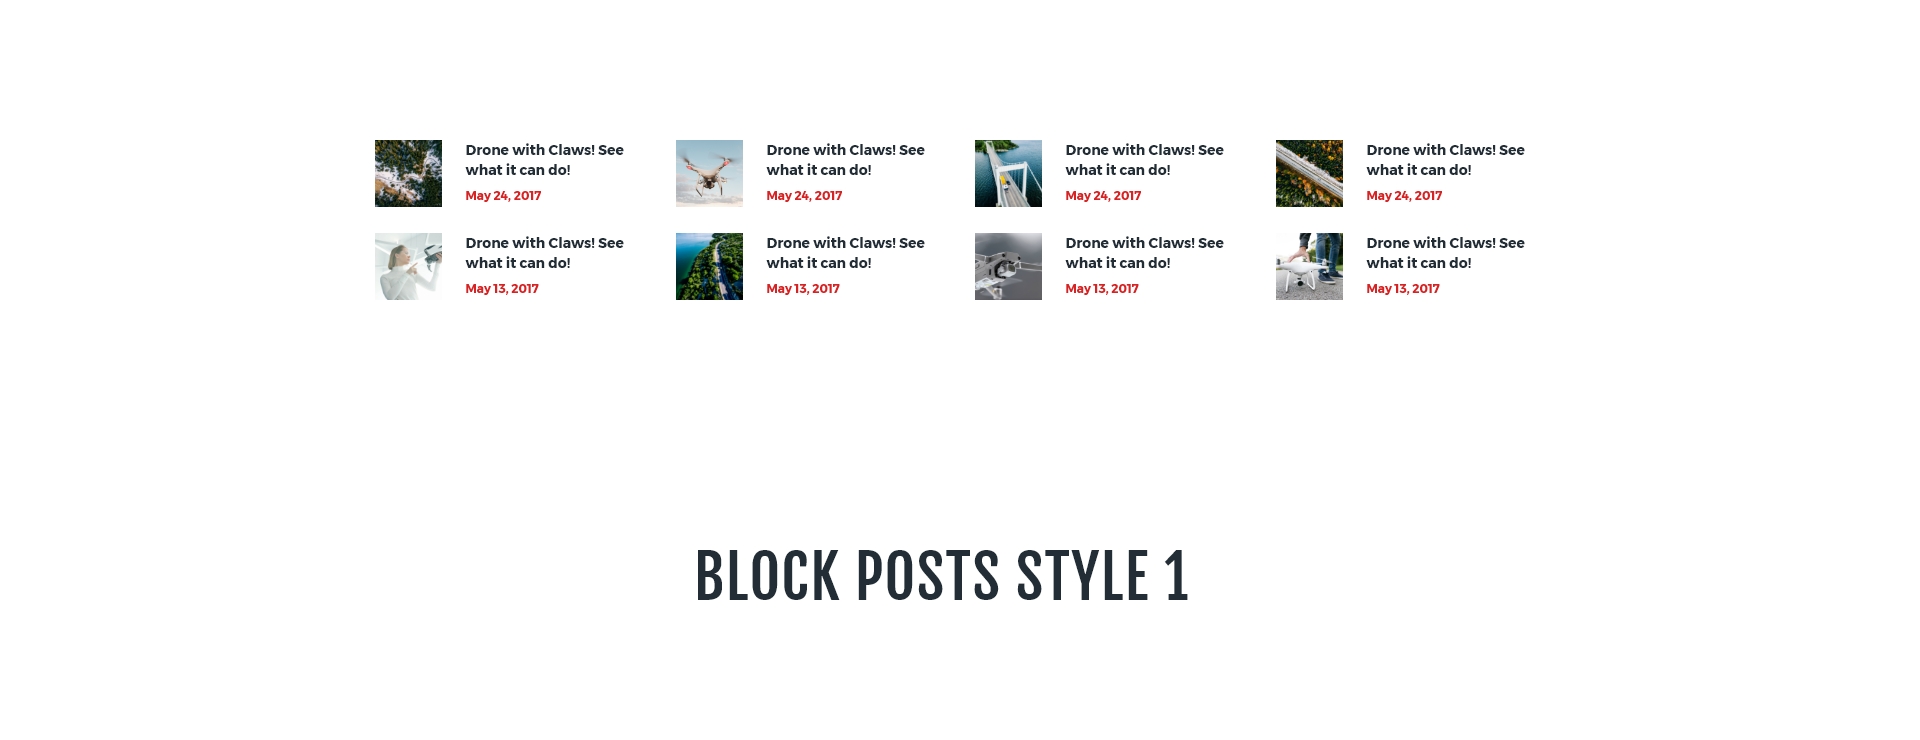 Block posts style 1